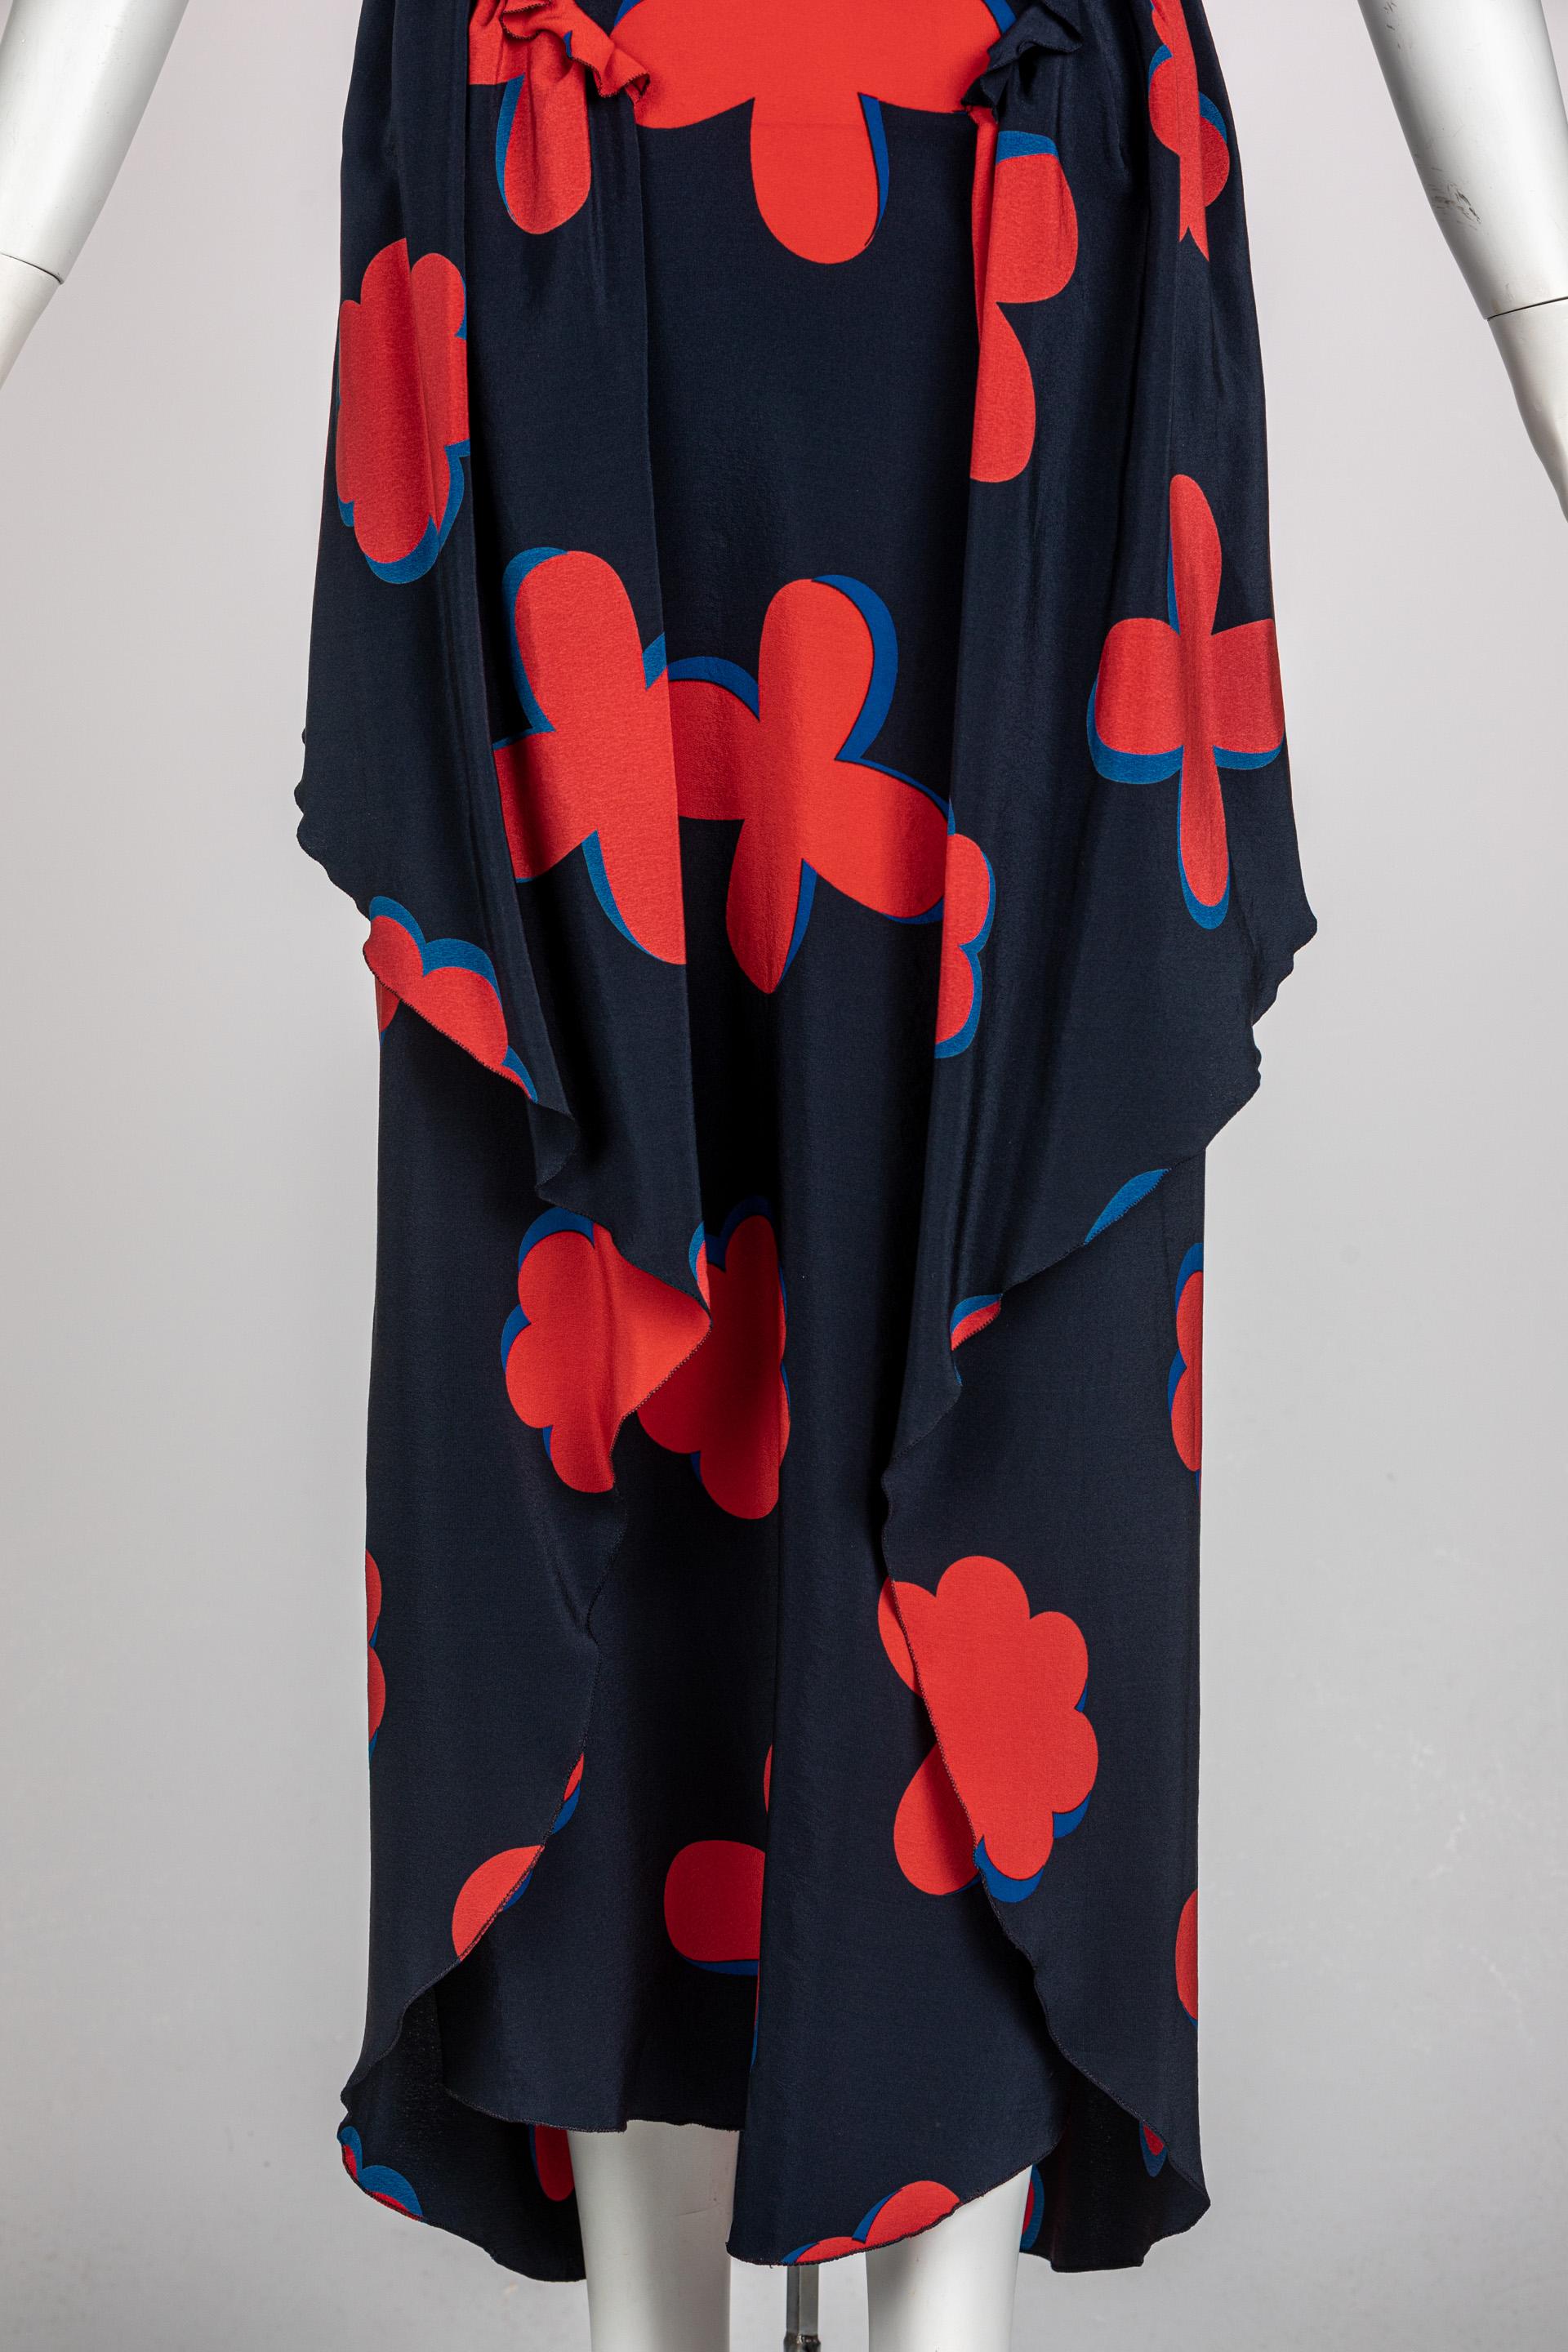 Vintage Chloé by Karl Lagerfeld Strapless Silk Printed Dress Spring 1979 2